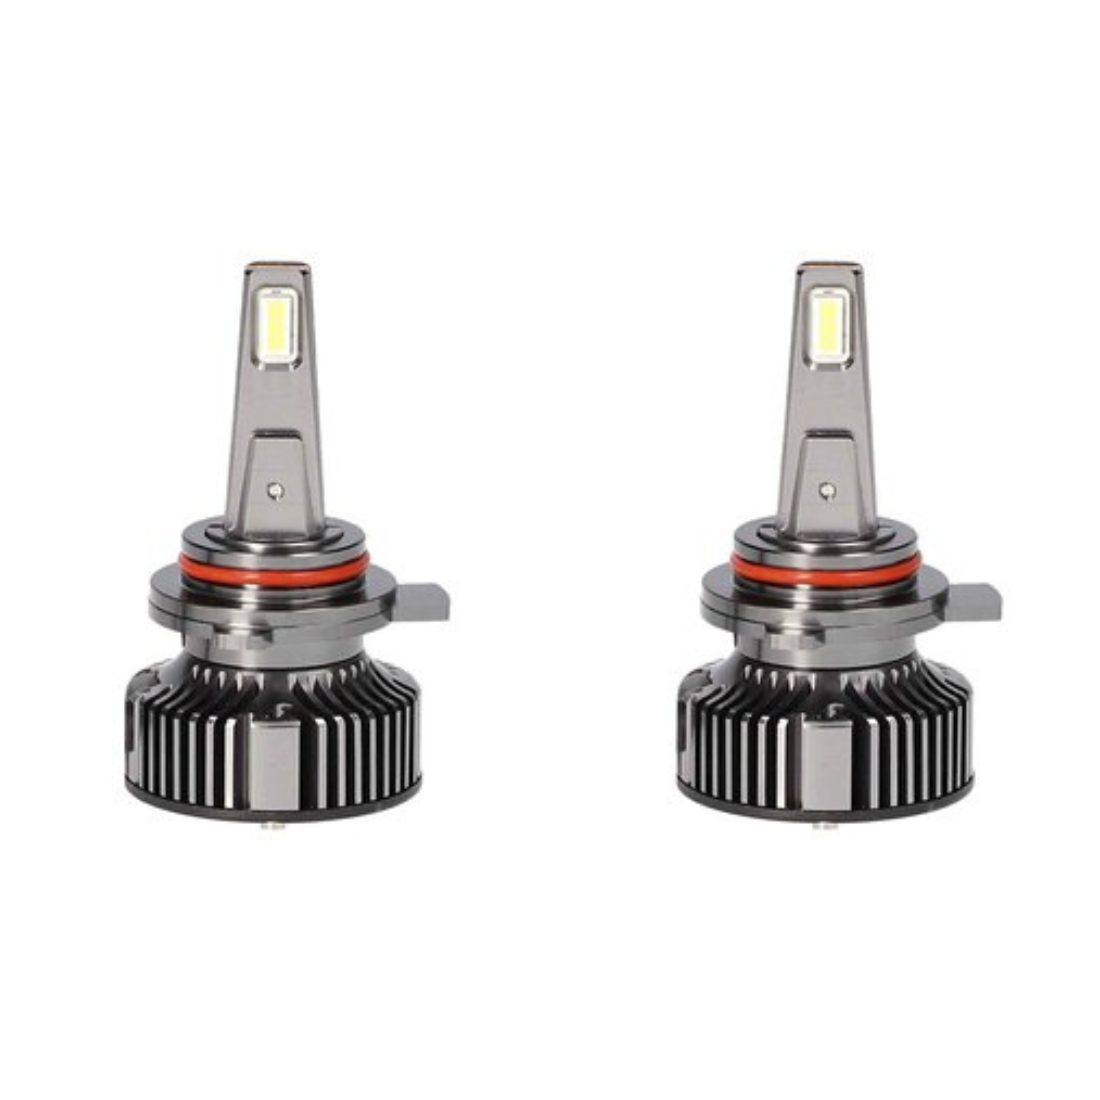 Heise HE-9012PRO 9012 Pro Series Single Beam Replacement Headlight LED Bulb Kit